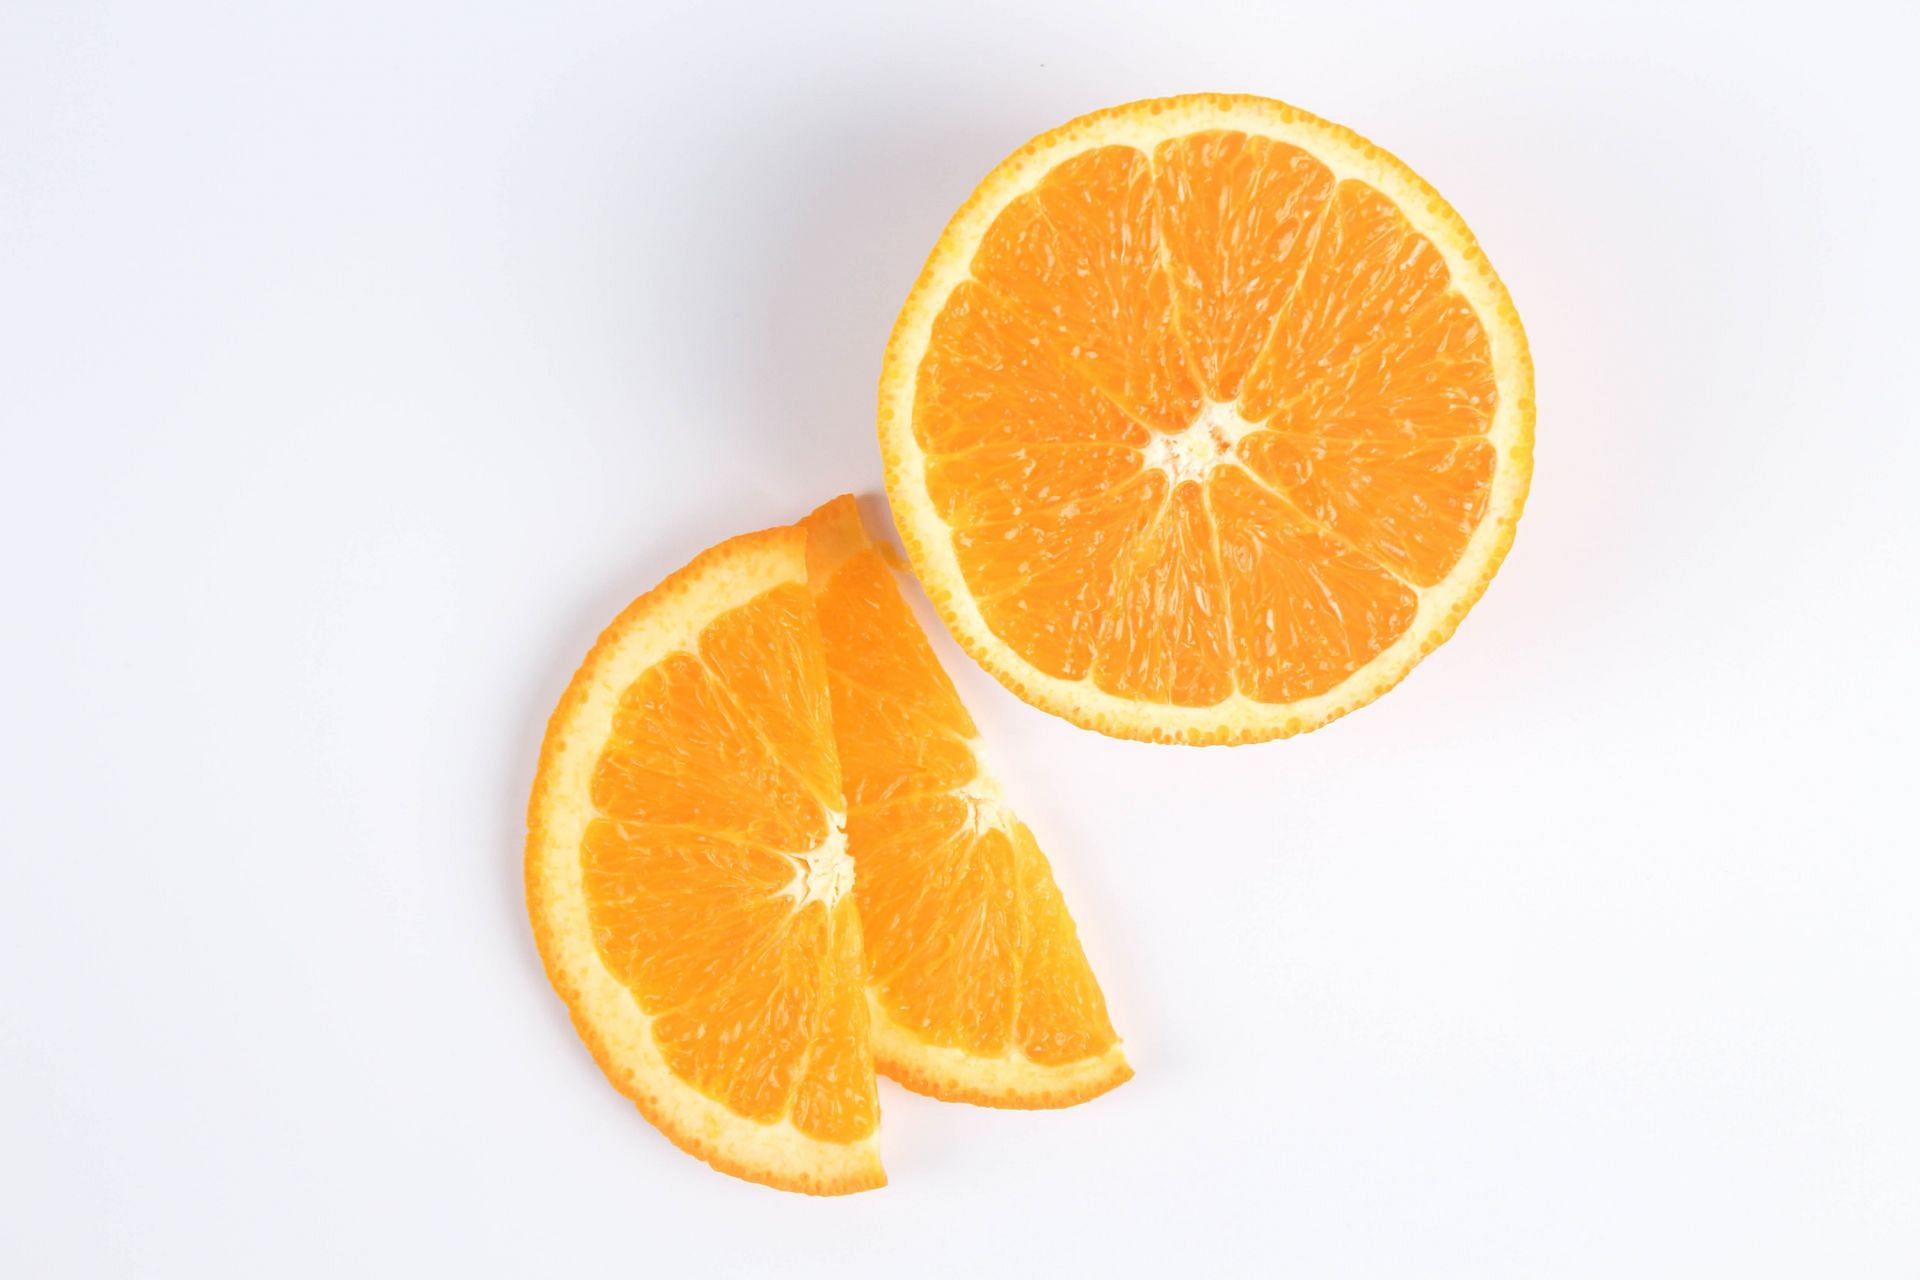 Oranges provide Vitamin C and calcium. (Image via Unsplash/Chang Duong)